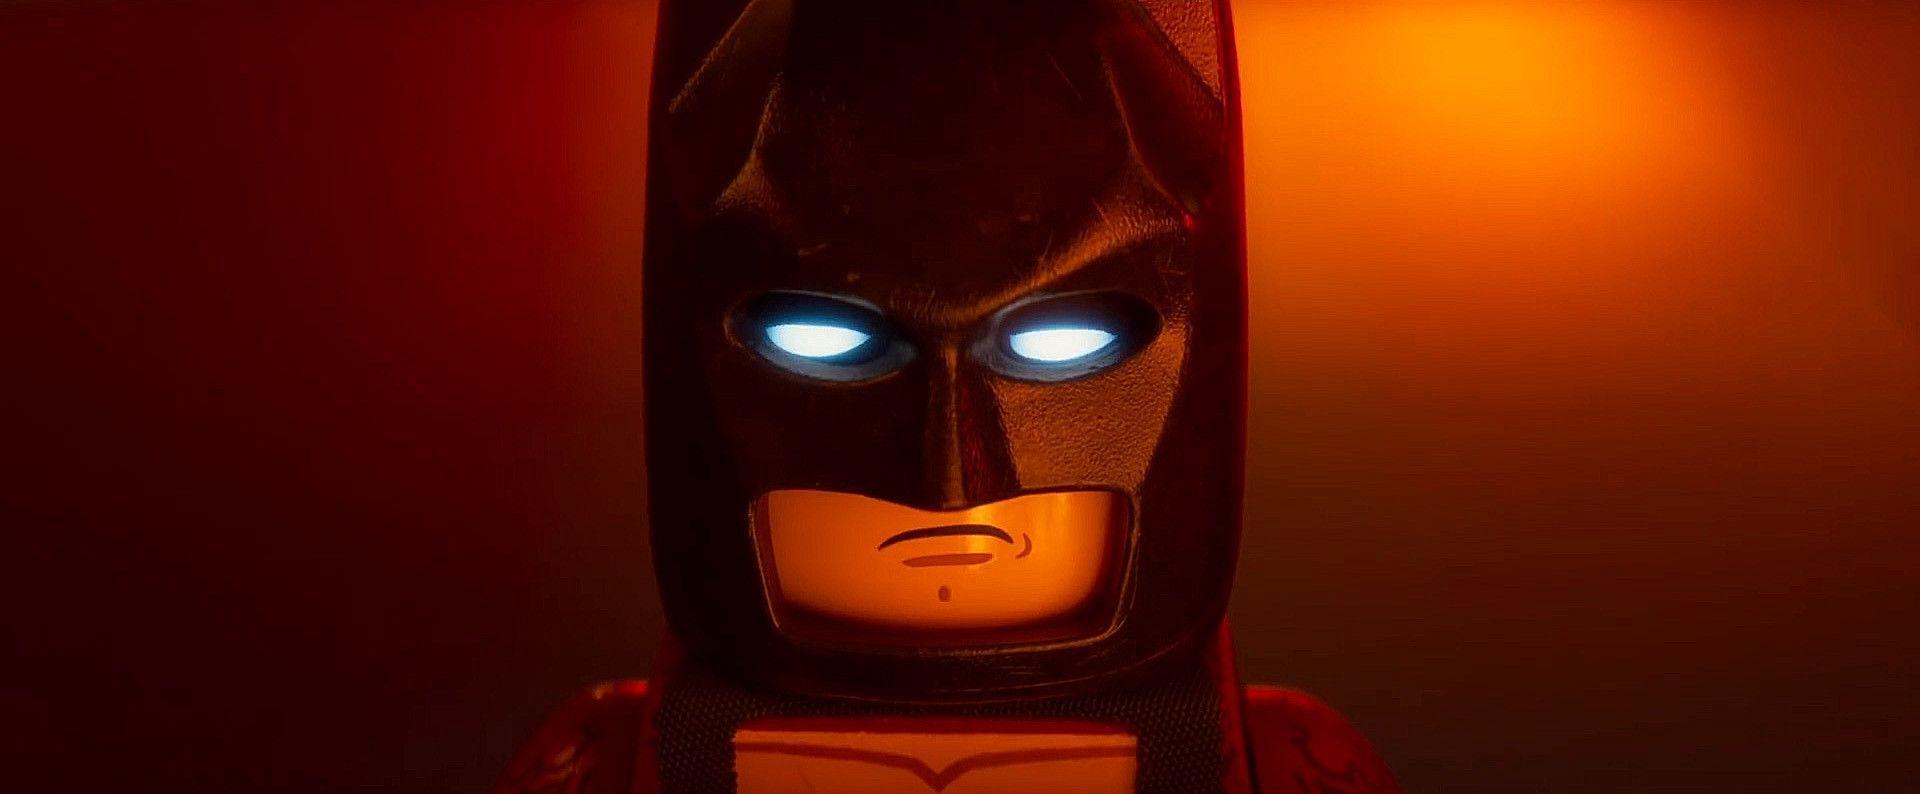 The Lego Batman Animation Movie Wallpaper 33